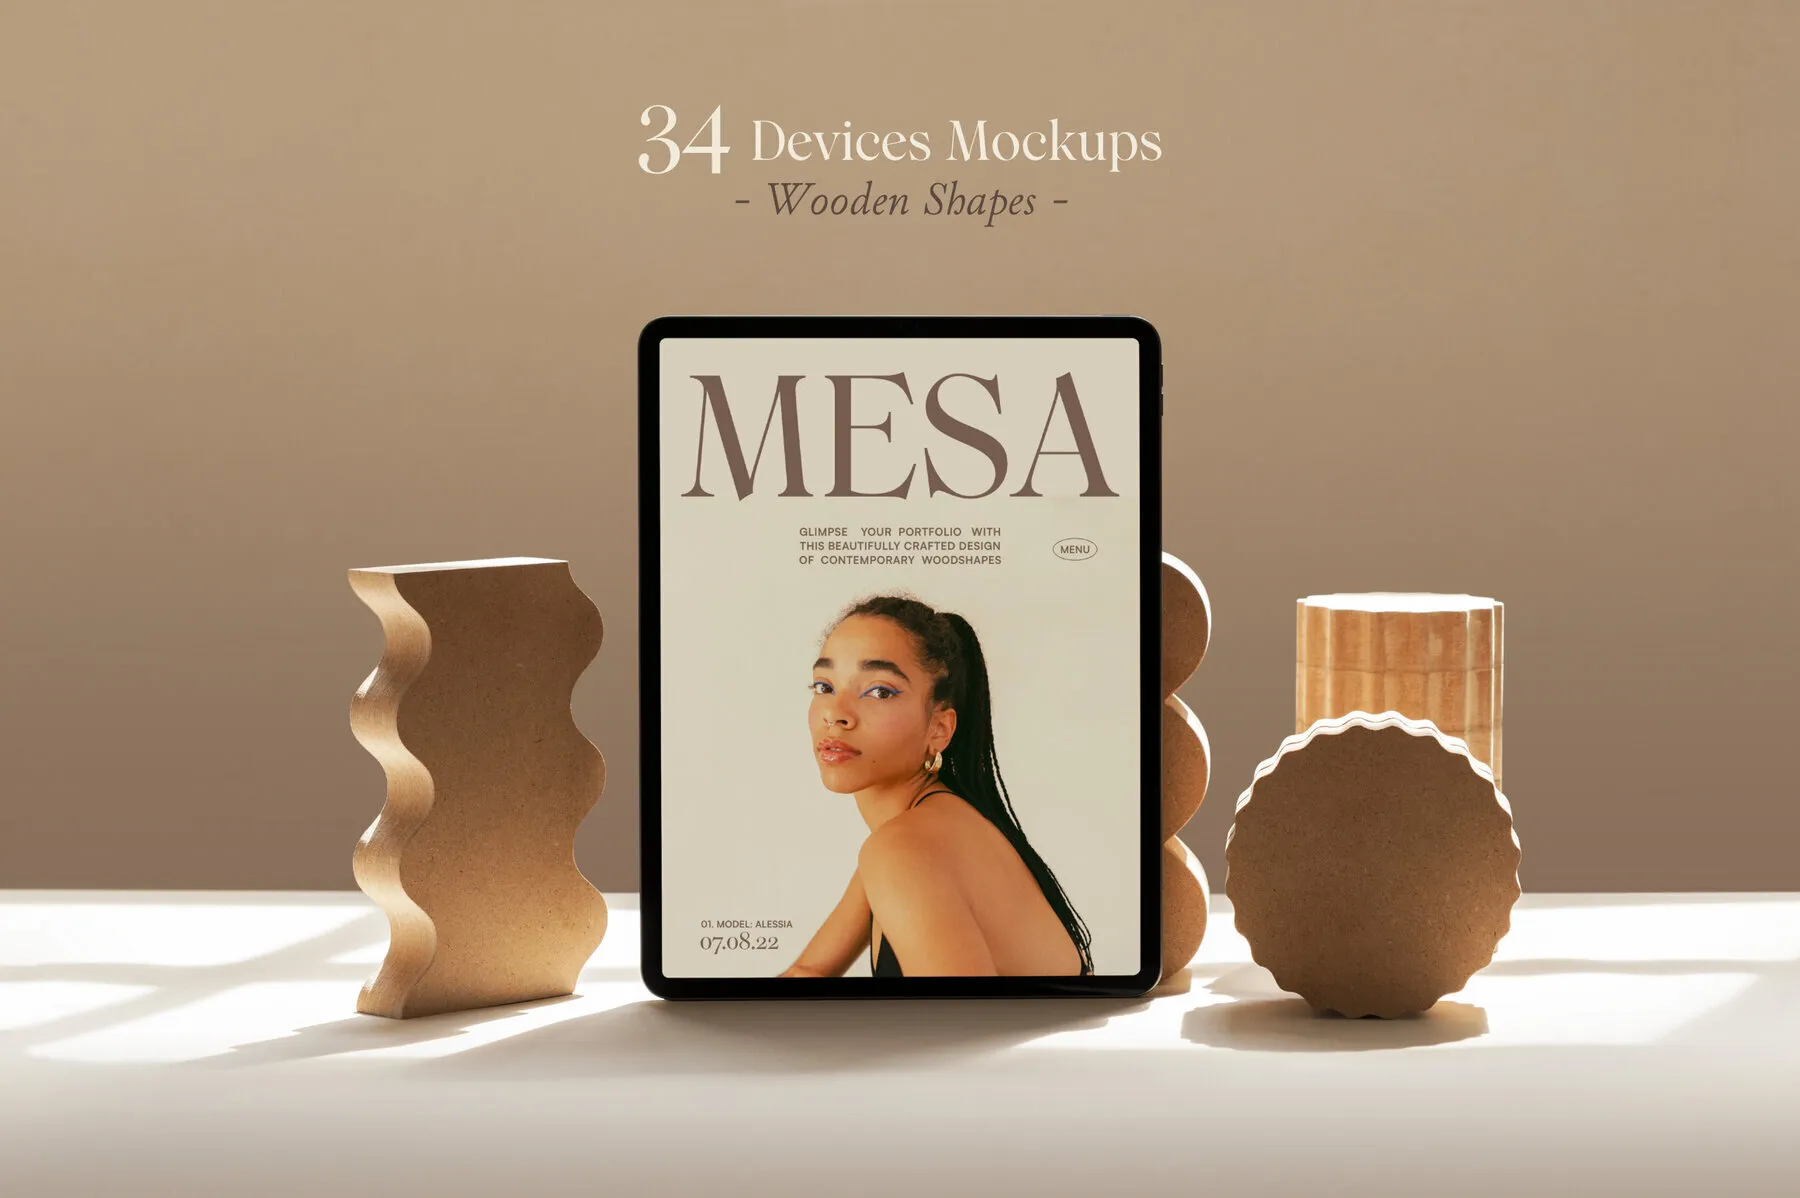 Mesa - Digital Devices Mockups